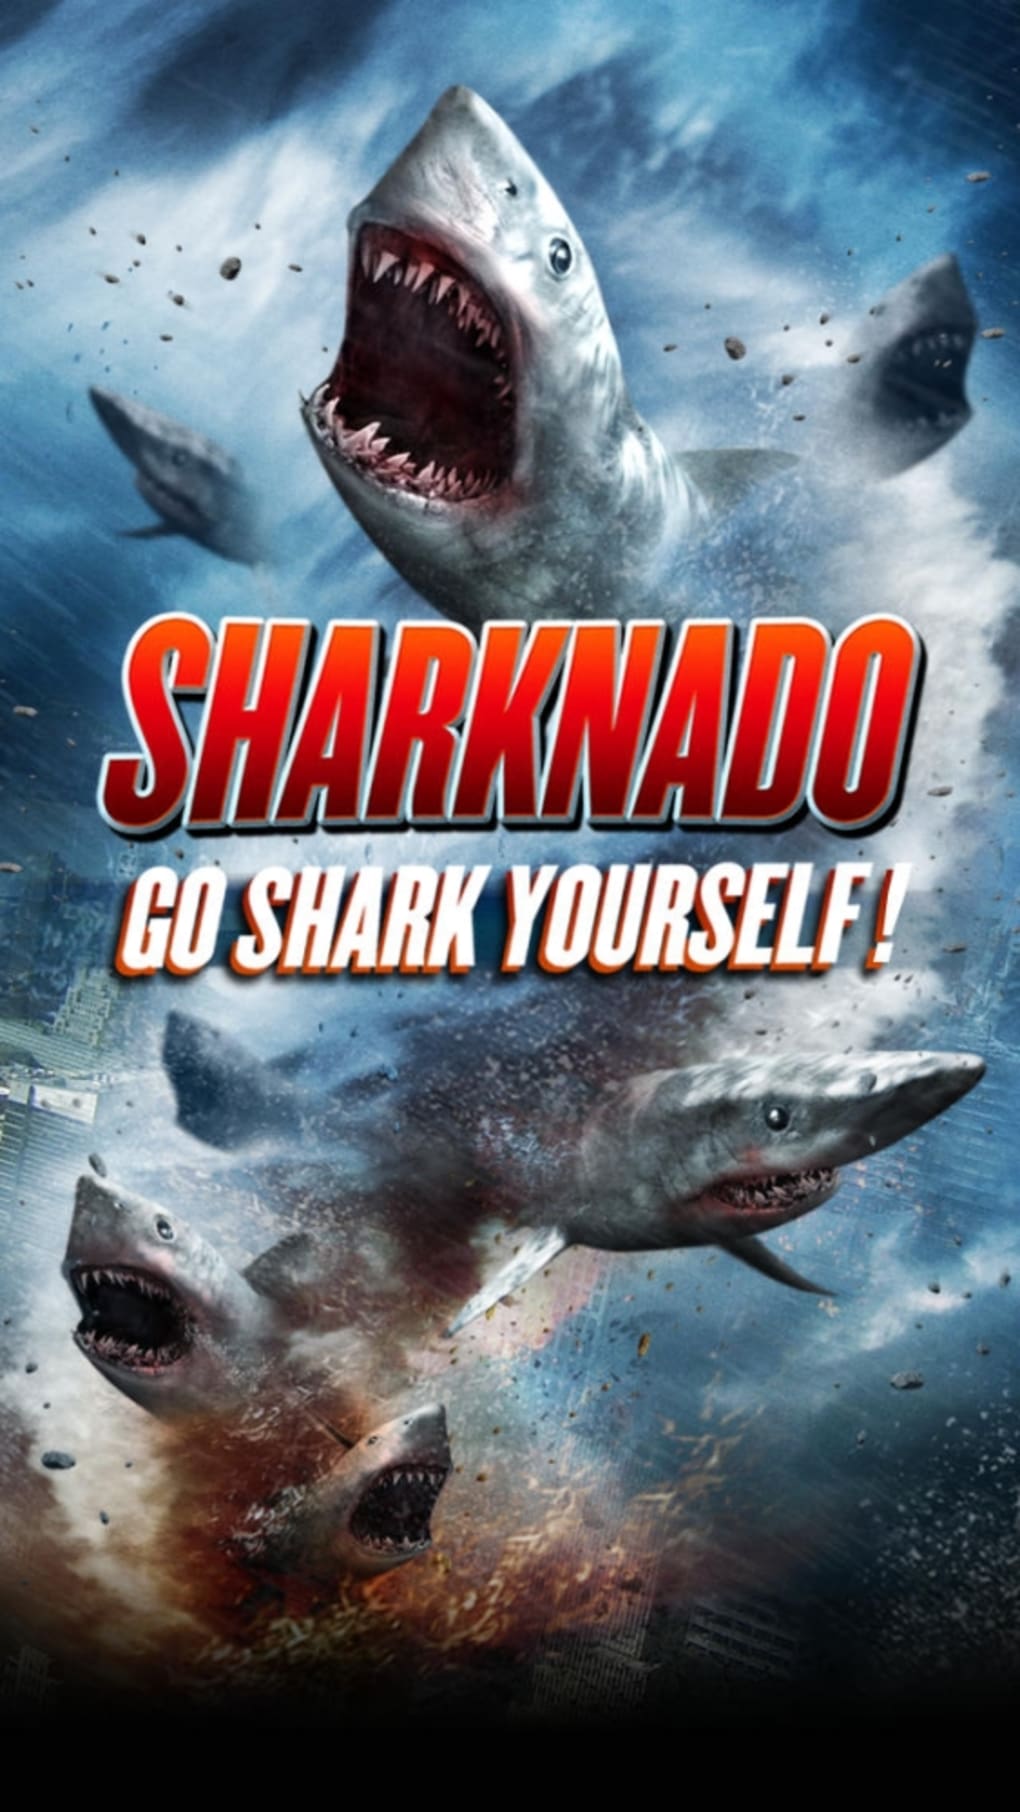 sharknado-go-shark-yourself-screenshot.jpg